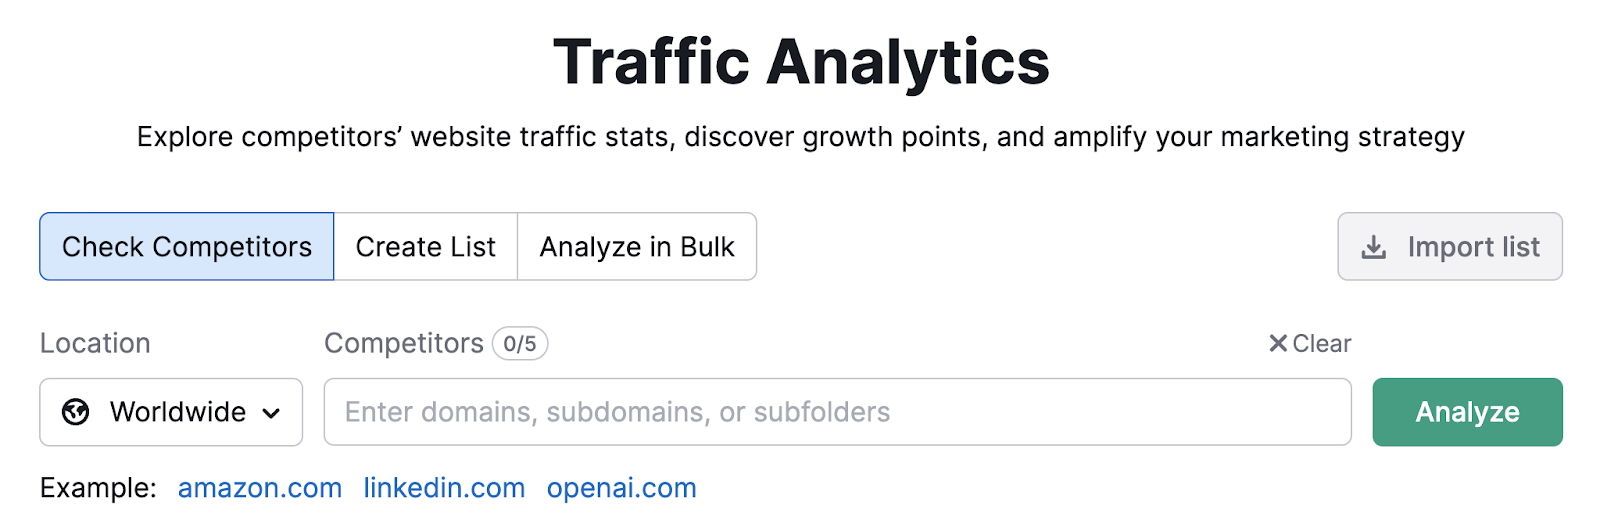 Traffic Analytics search